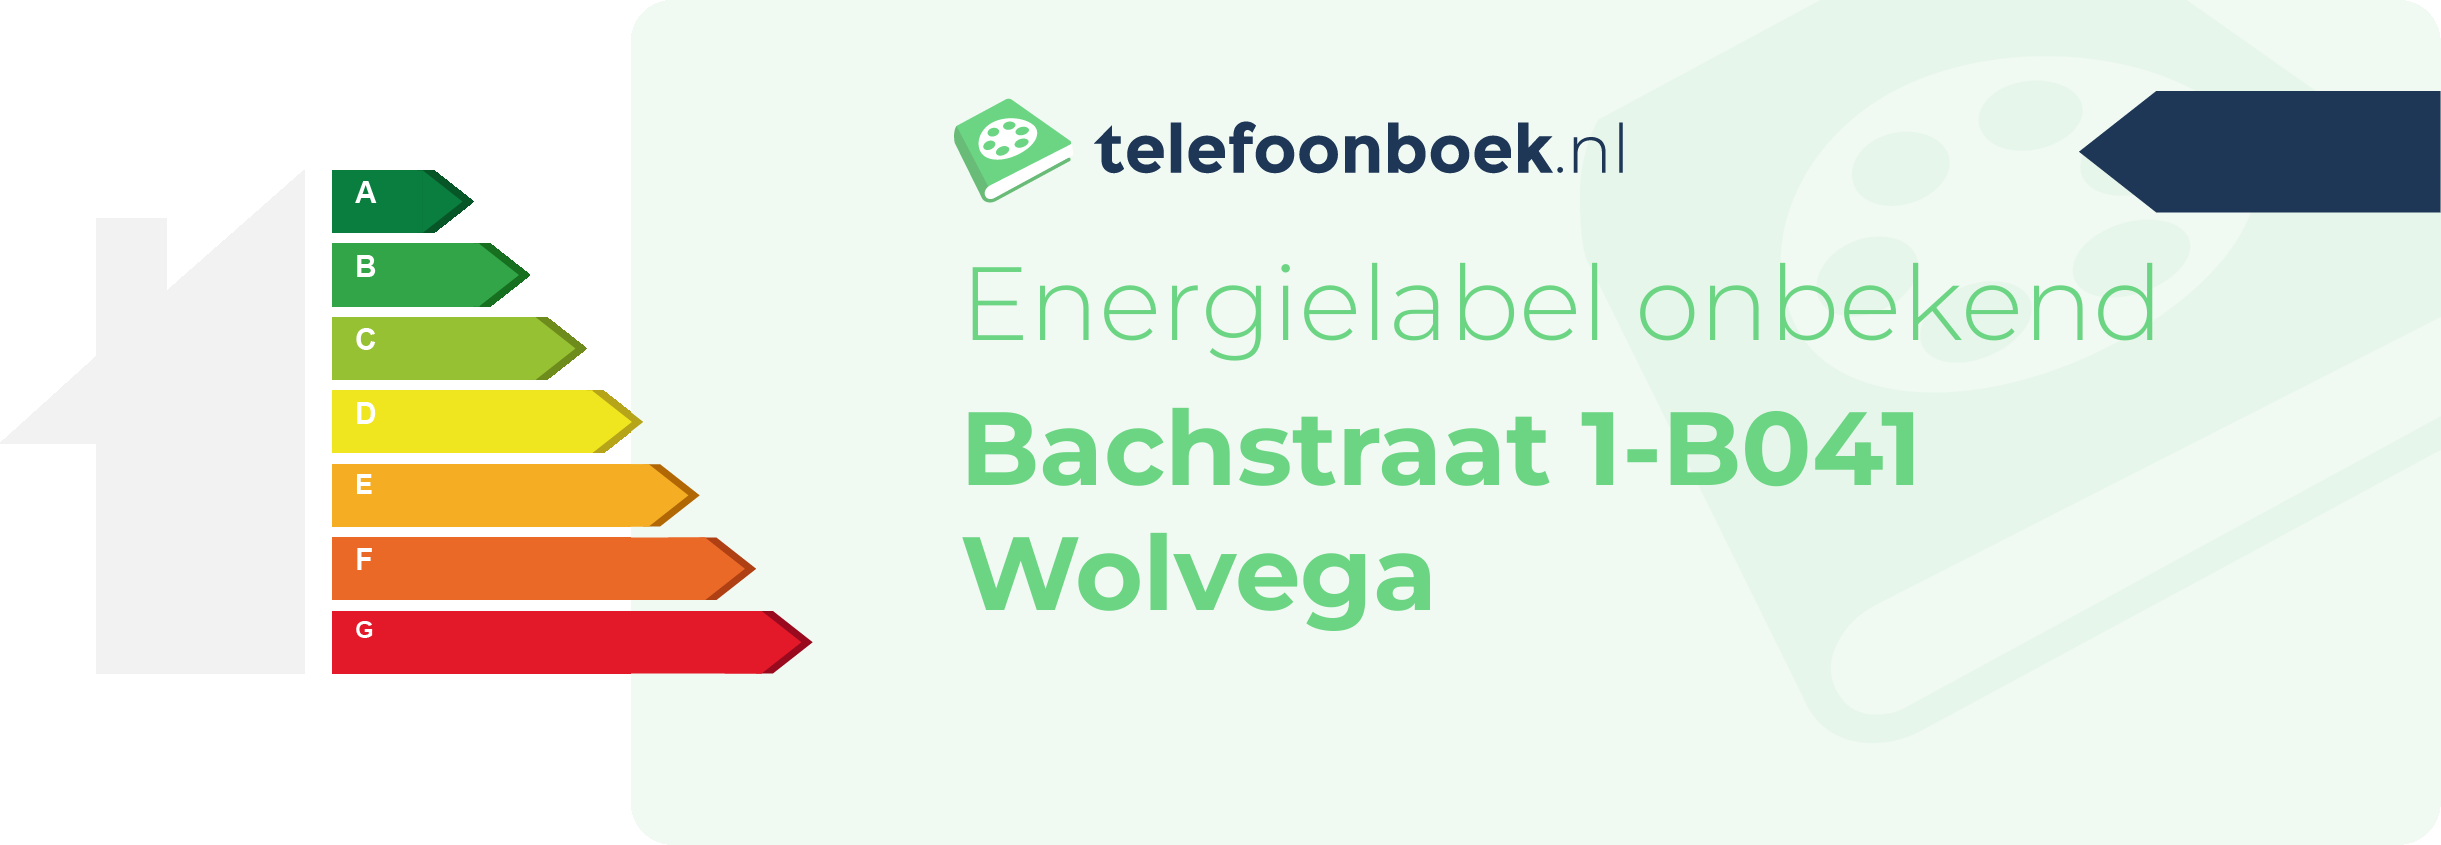 Energielabel Bachstraat 1-B041 Wolvega